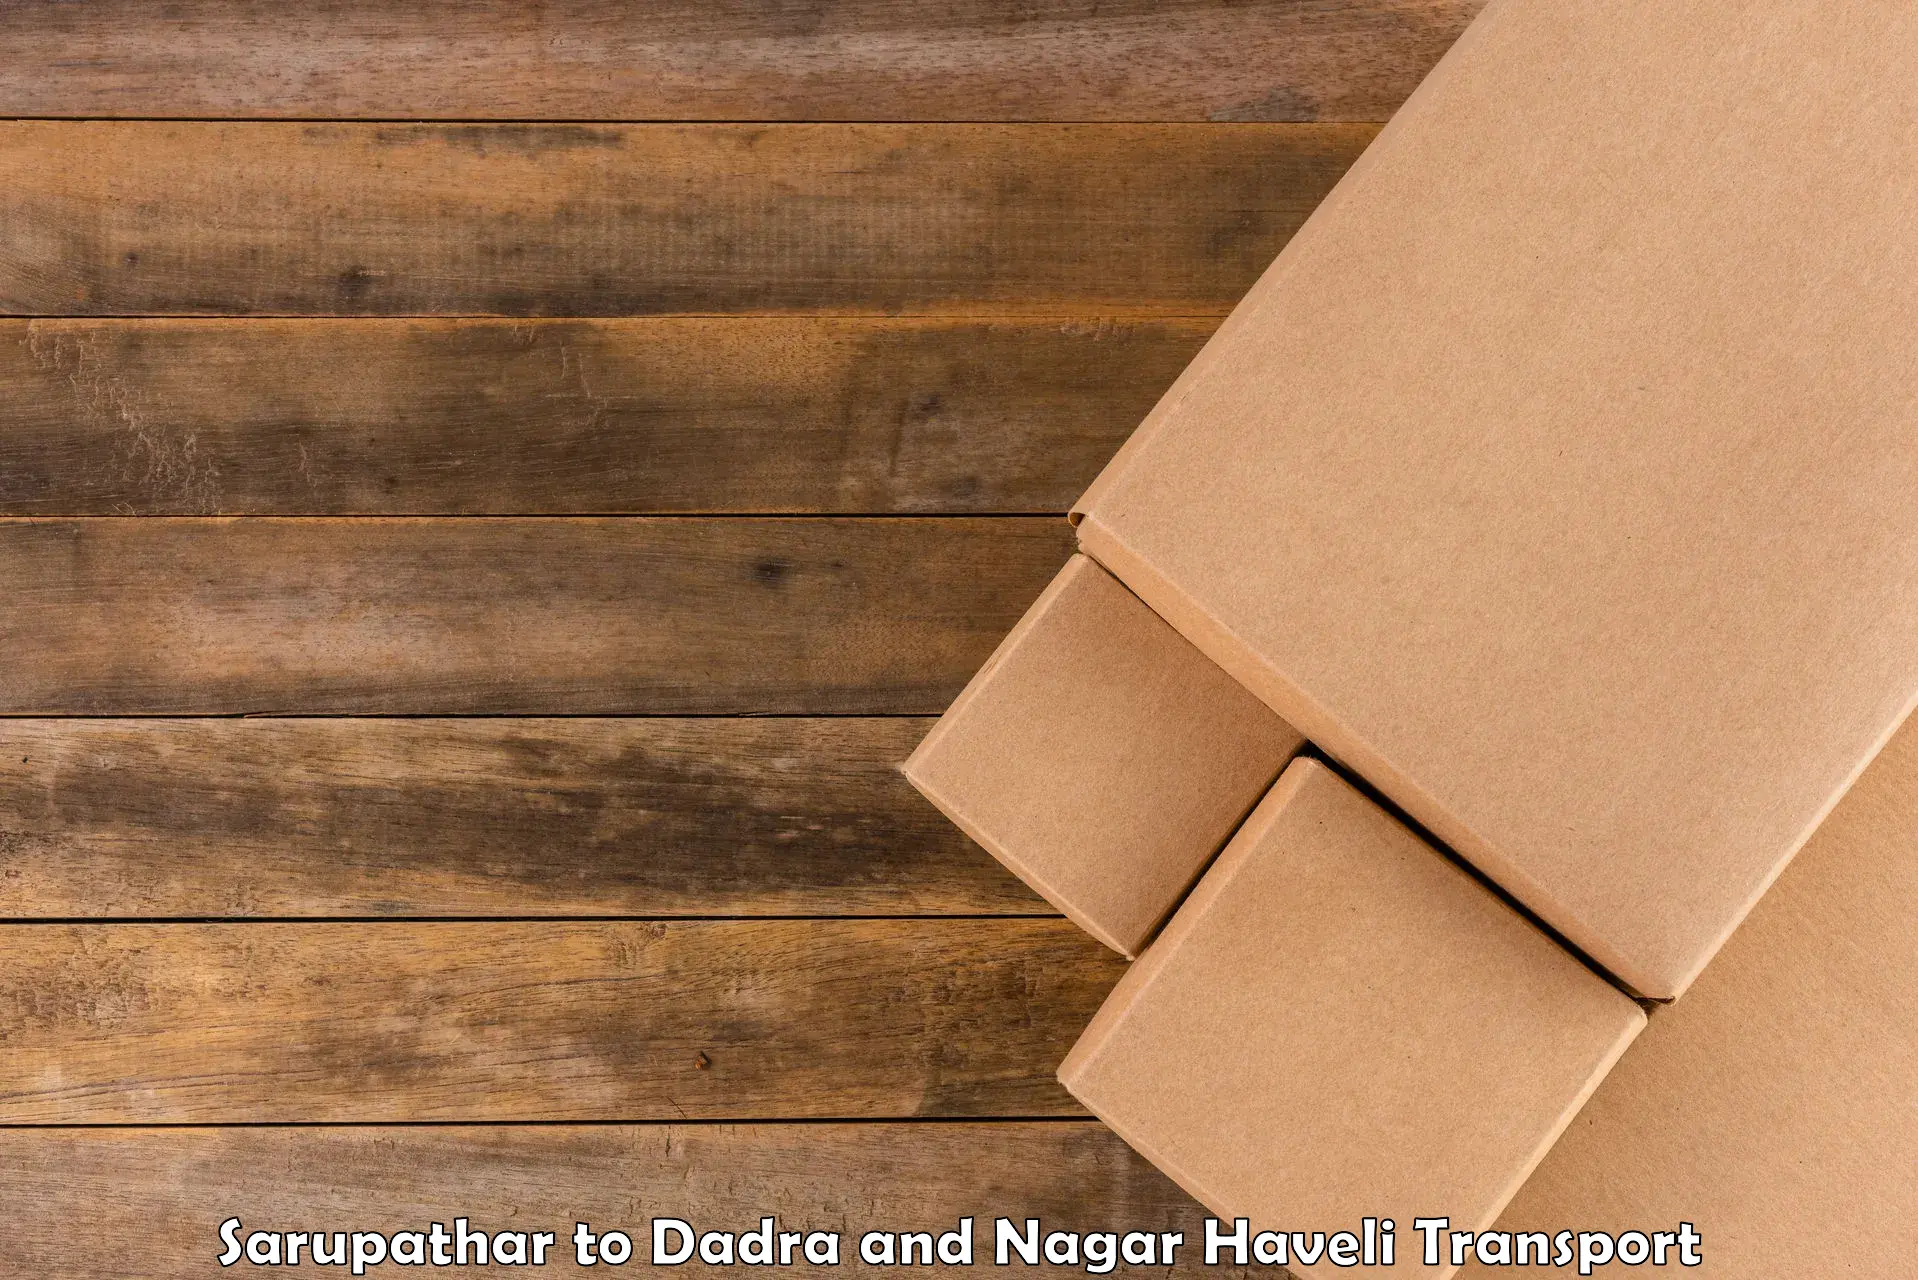 Shipping partner Sarupathar to Dadra and Nagar Haveli